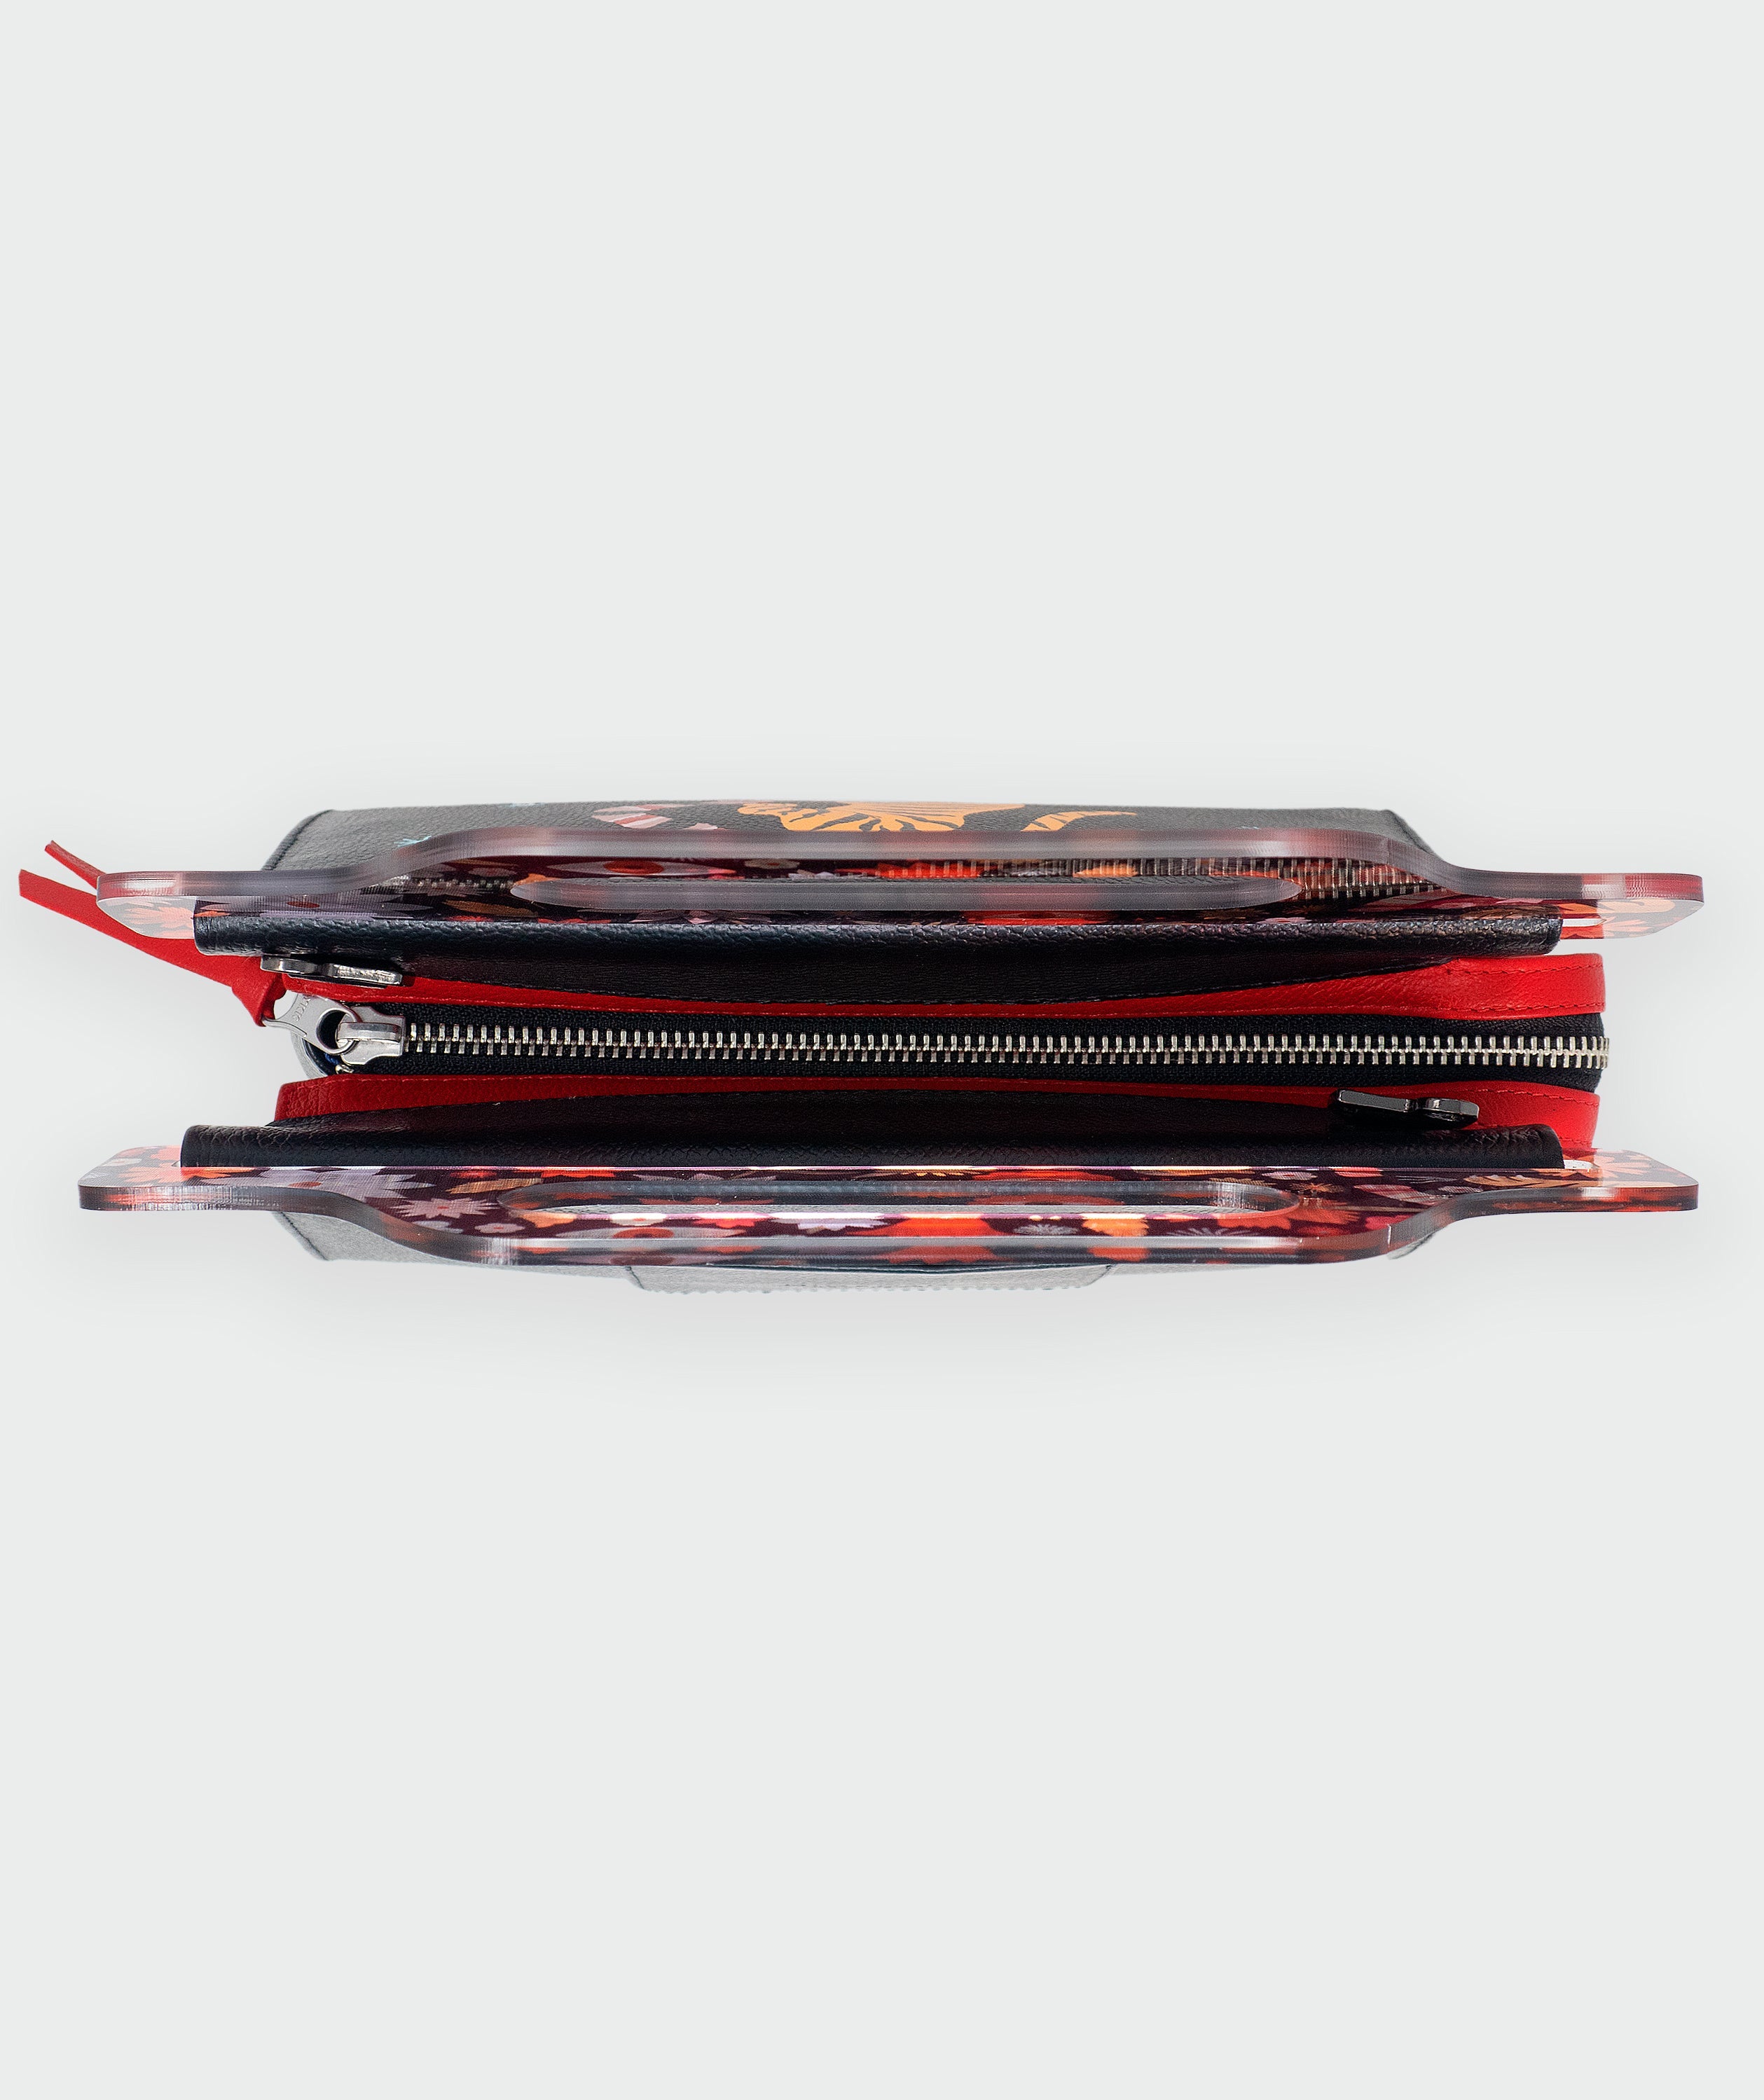 Vali Black Leather Crossbody Handbag Plastic Handle - Tiger And Snake Print - Top view